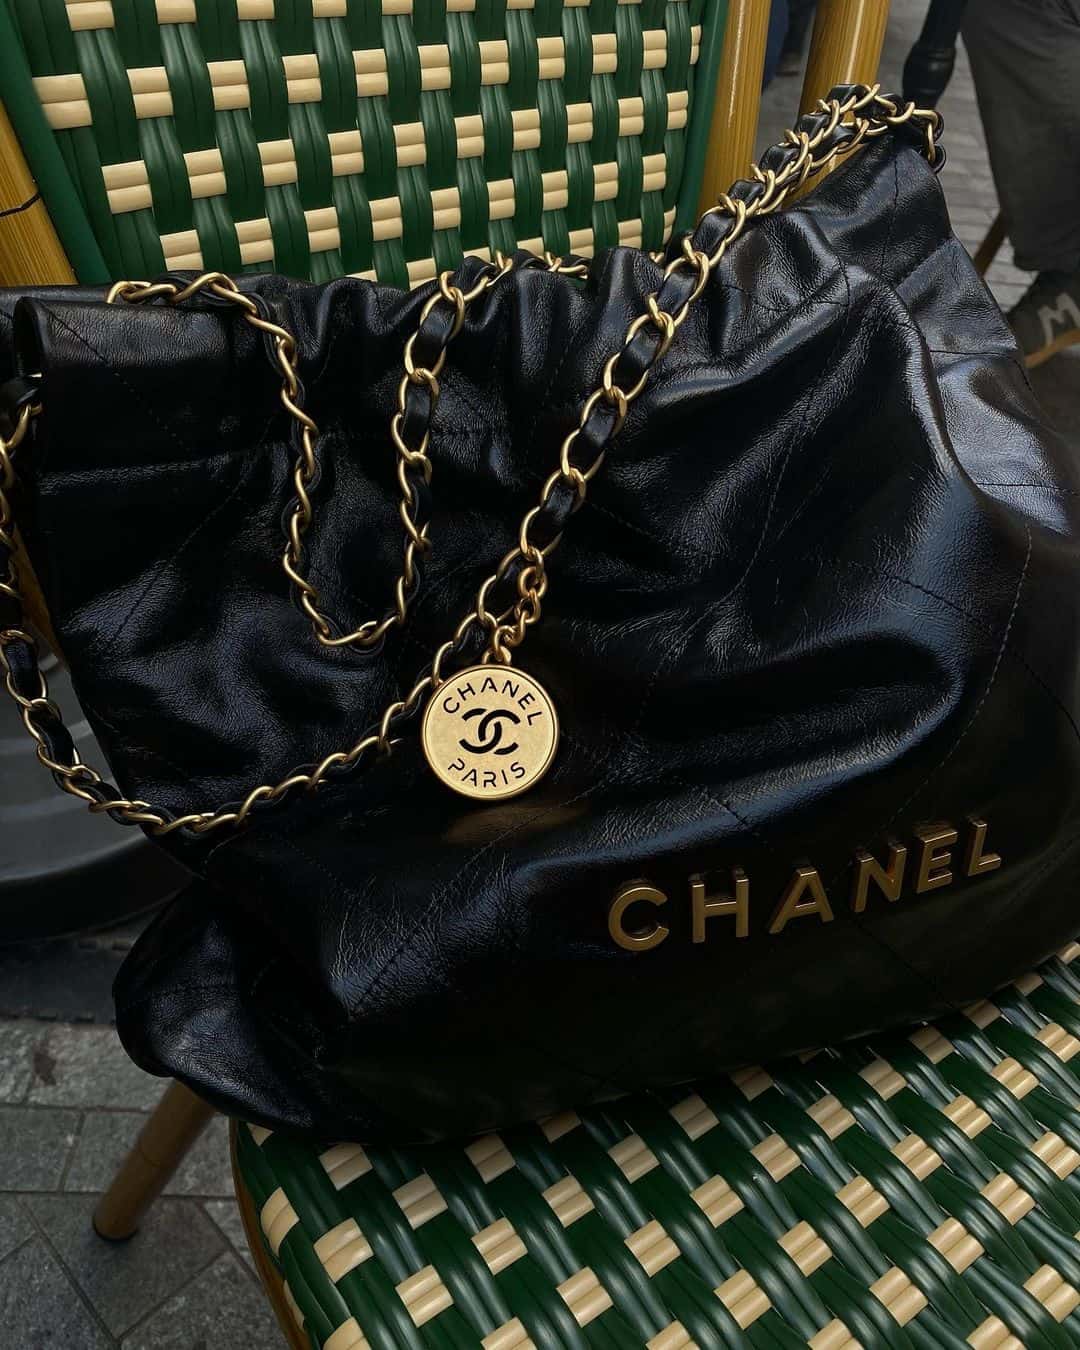 price of original chanel bag